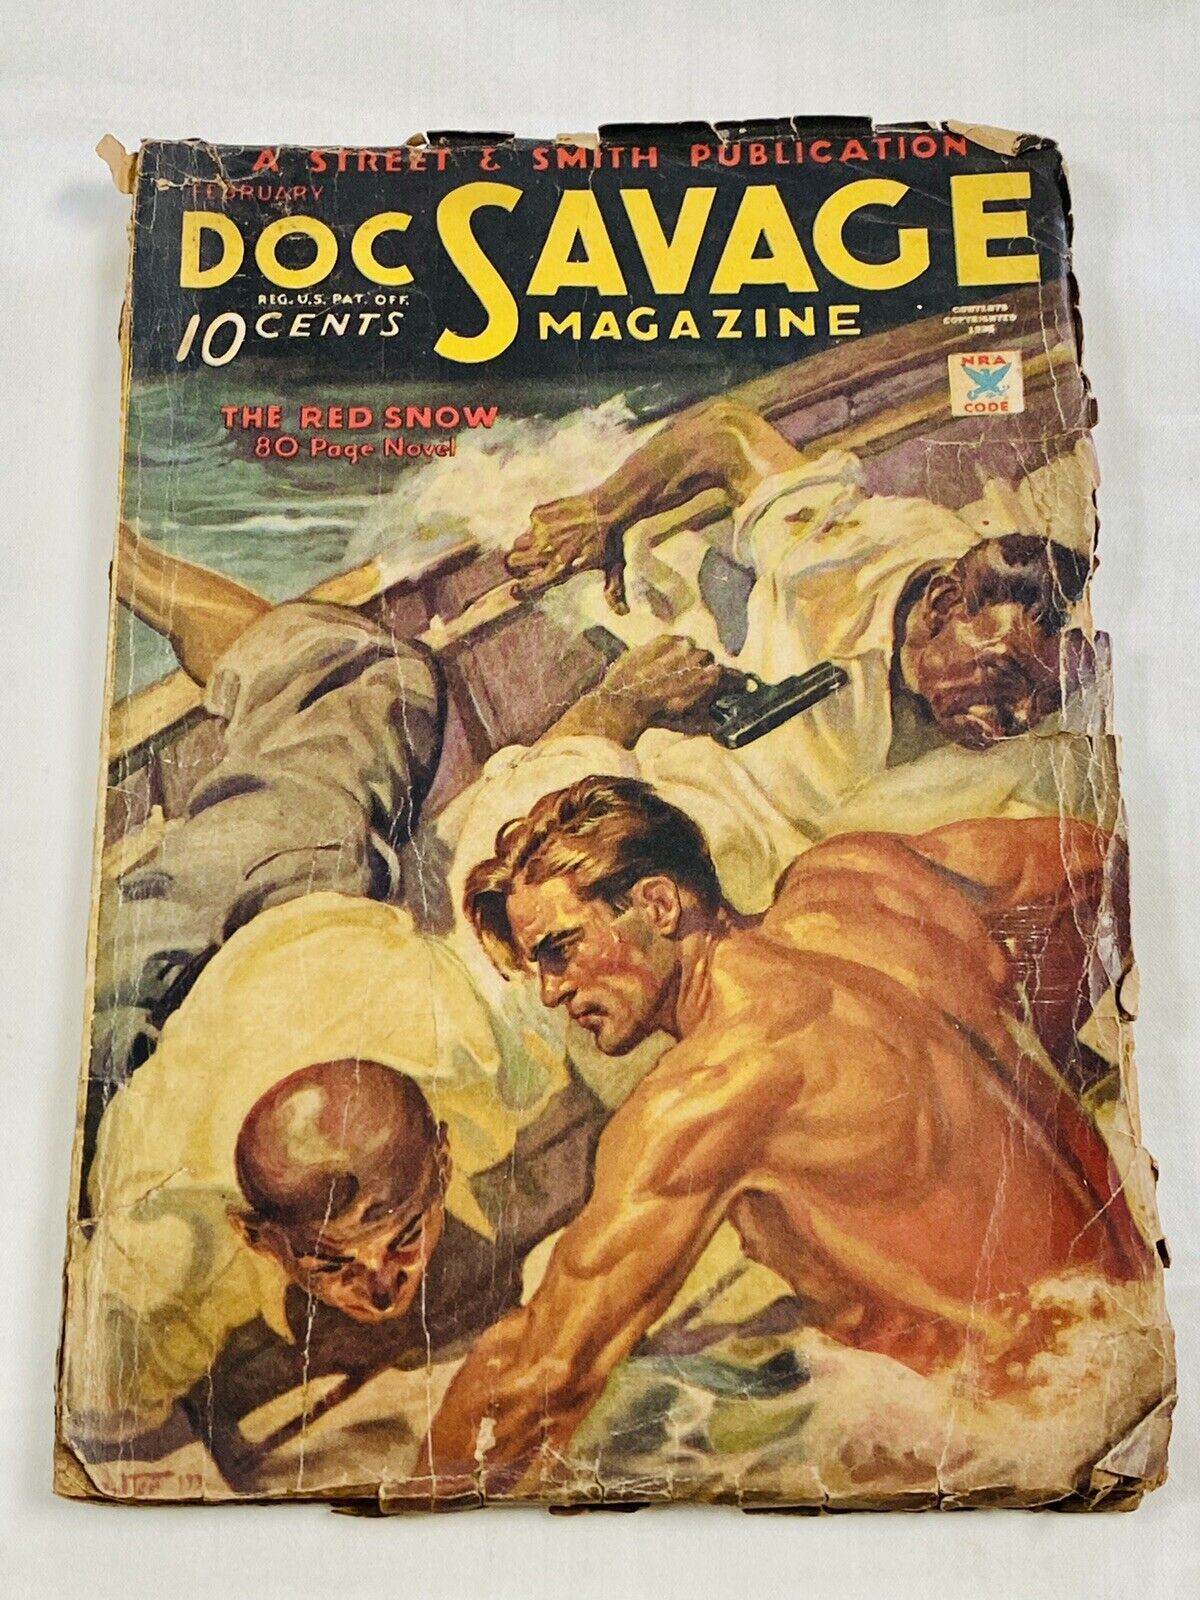 Original Doc Savage February 1935 Pulp Magazine “Red Snow” Volume 4 # 6